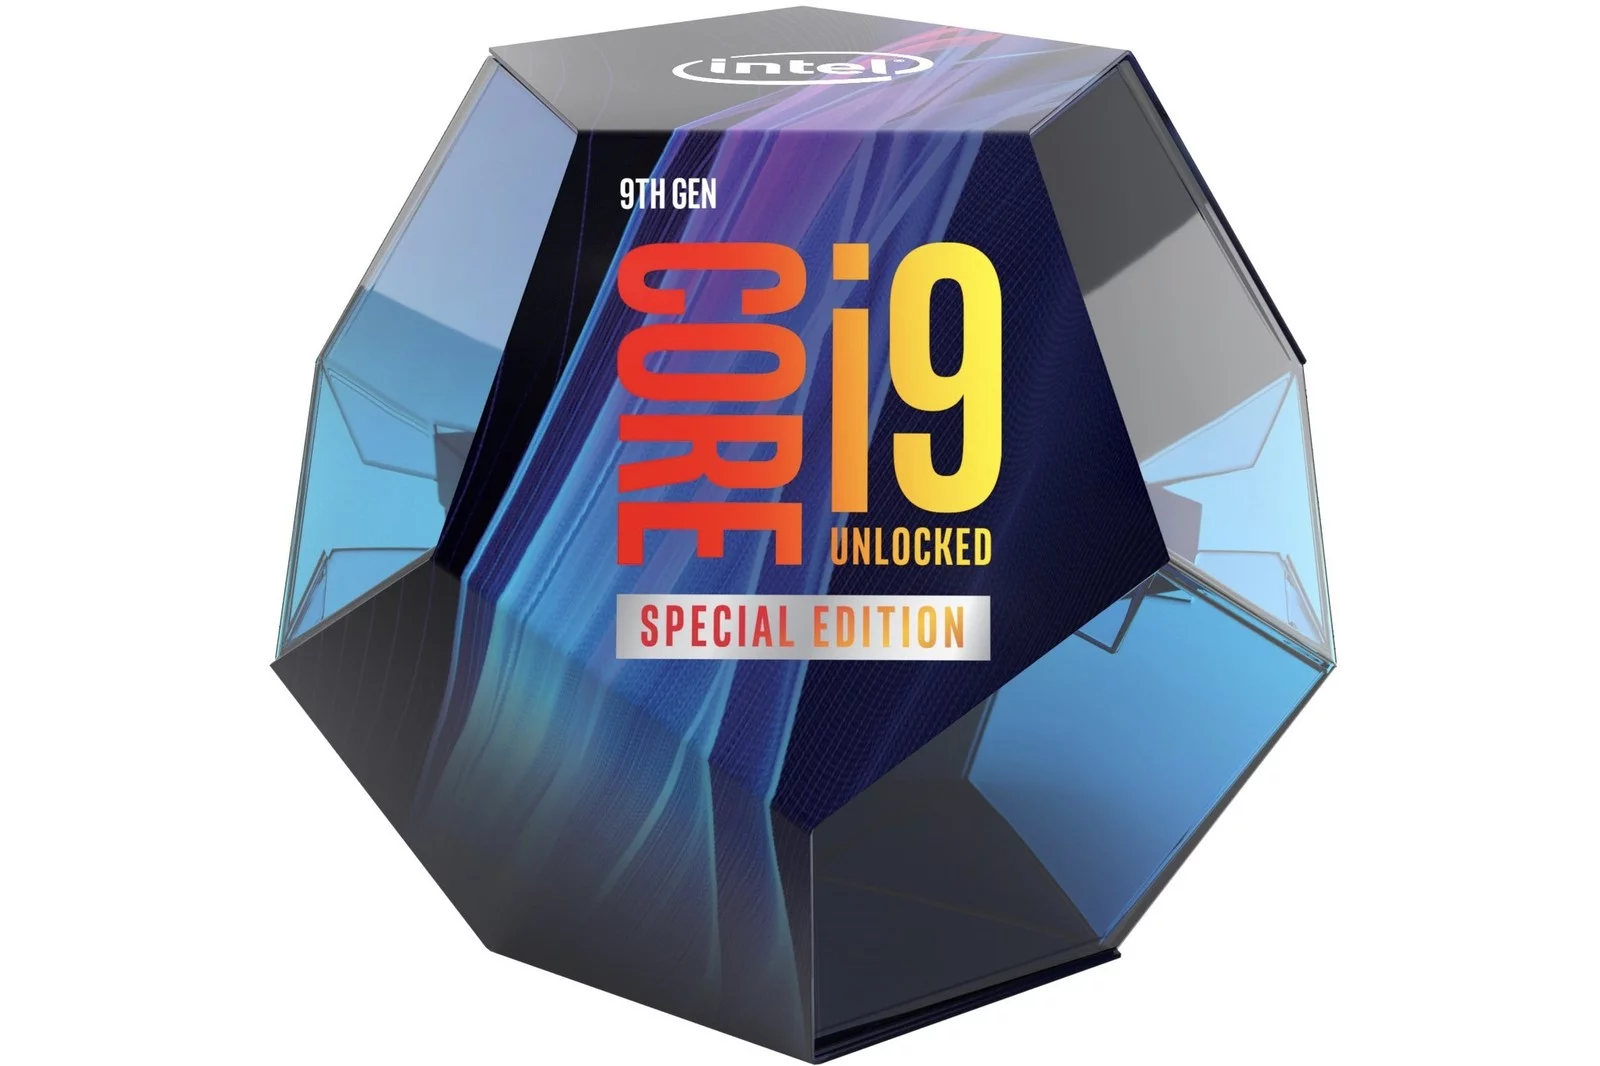 Intel Core i9-9900KS / Ice Lake